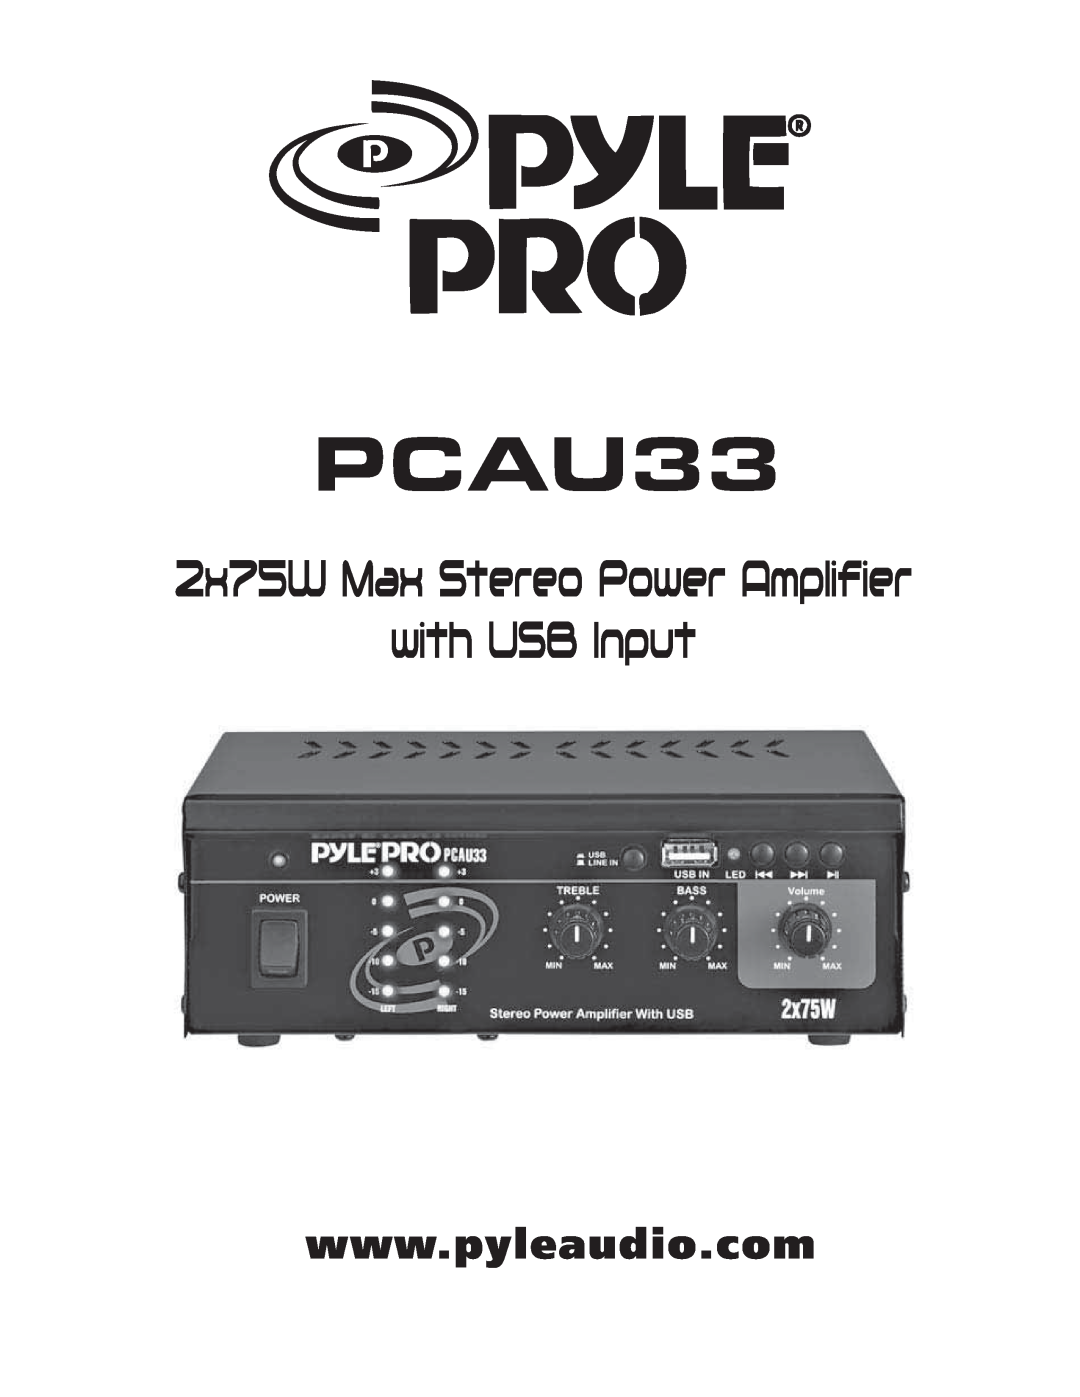 PYLE Audio PCAU33 manual 2x75W Max Stereo Power Amplifier with USB Input 